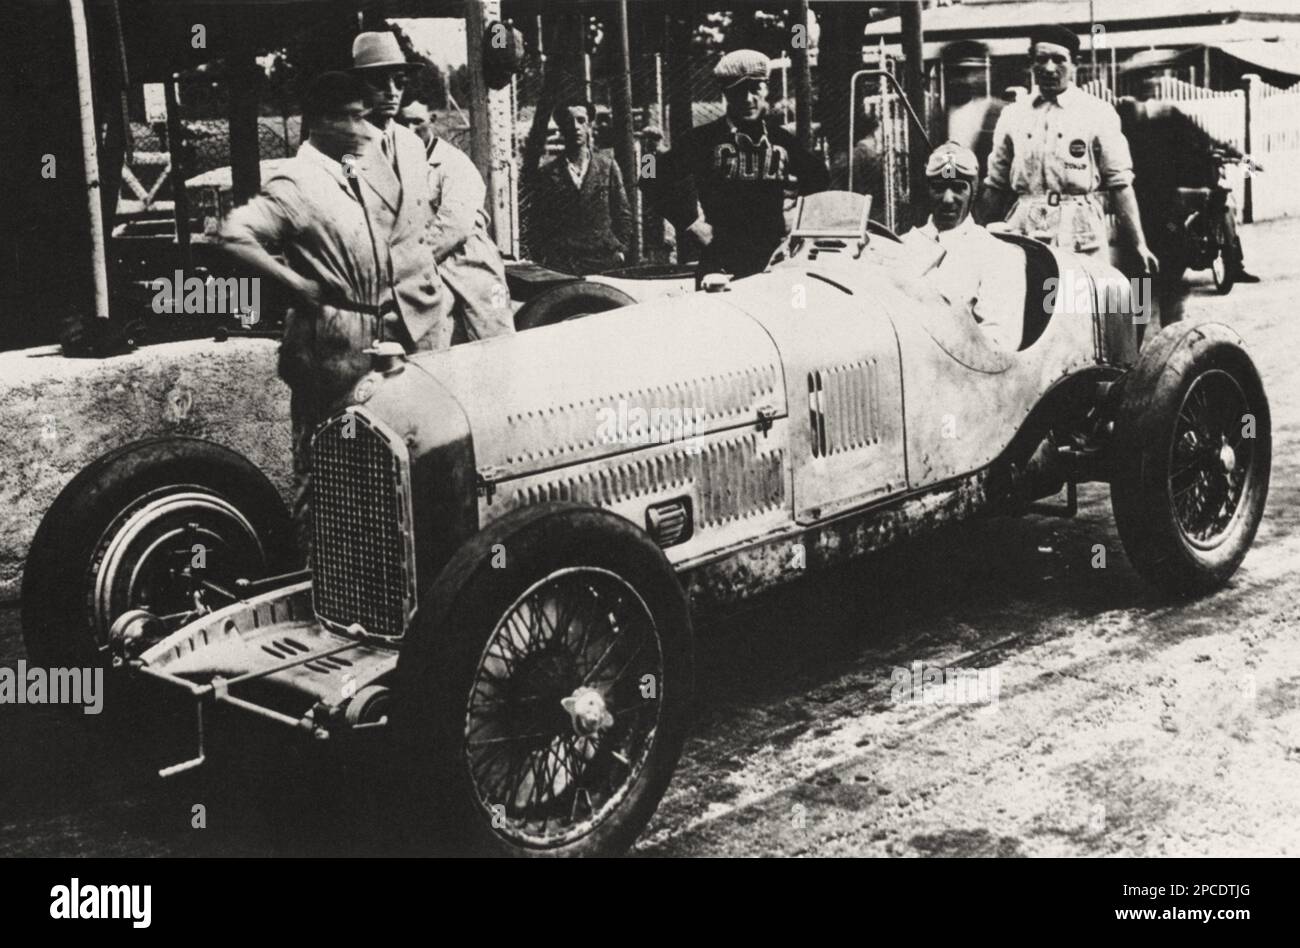 1933, ITALIE : COURSE automobile MILLE MIGLIA , le gagnant TAZIO NUVOLARI ( 1892 - 1953 ) sur P3 ALFA ROMEO . Photo par Villa , Monza - SPORT - AUTOMOBILISMO - gara autobilistica - AUTOMOBILE - corsa - AUTO - VOITURE - PHOTO D'HISTOIRE - FOTO STORICA STORICHE - MilleMiglia - automoilismo - automobile - chapeau - cappello --- Archivio GBB Banque D'Images